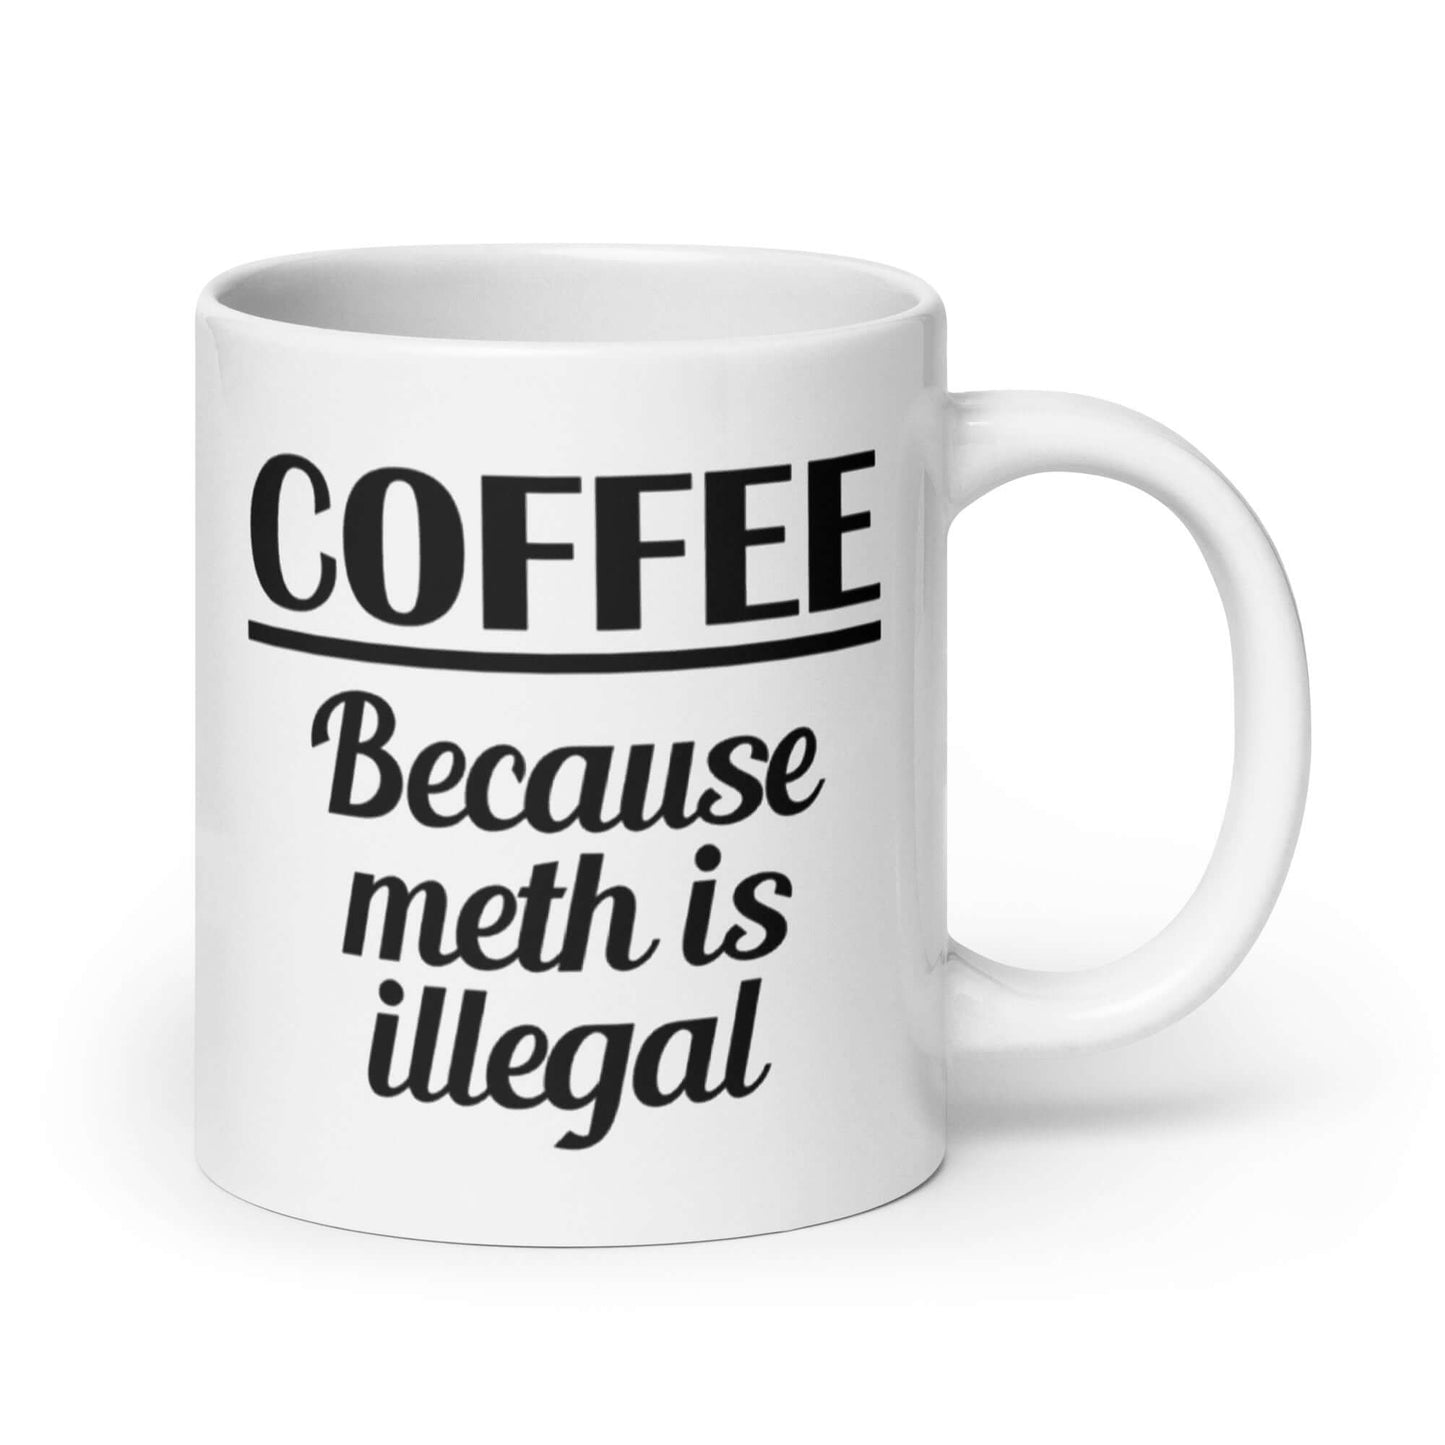 Funny coffee because meth is illegal sarcastic mug